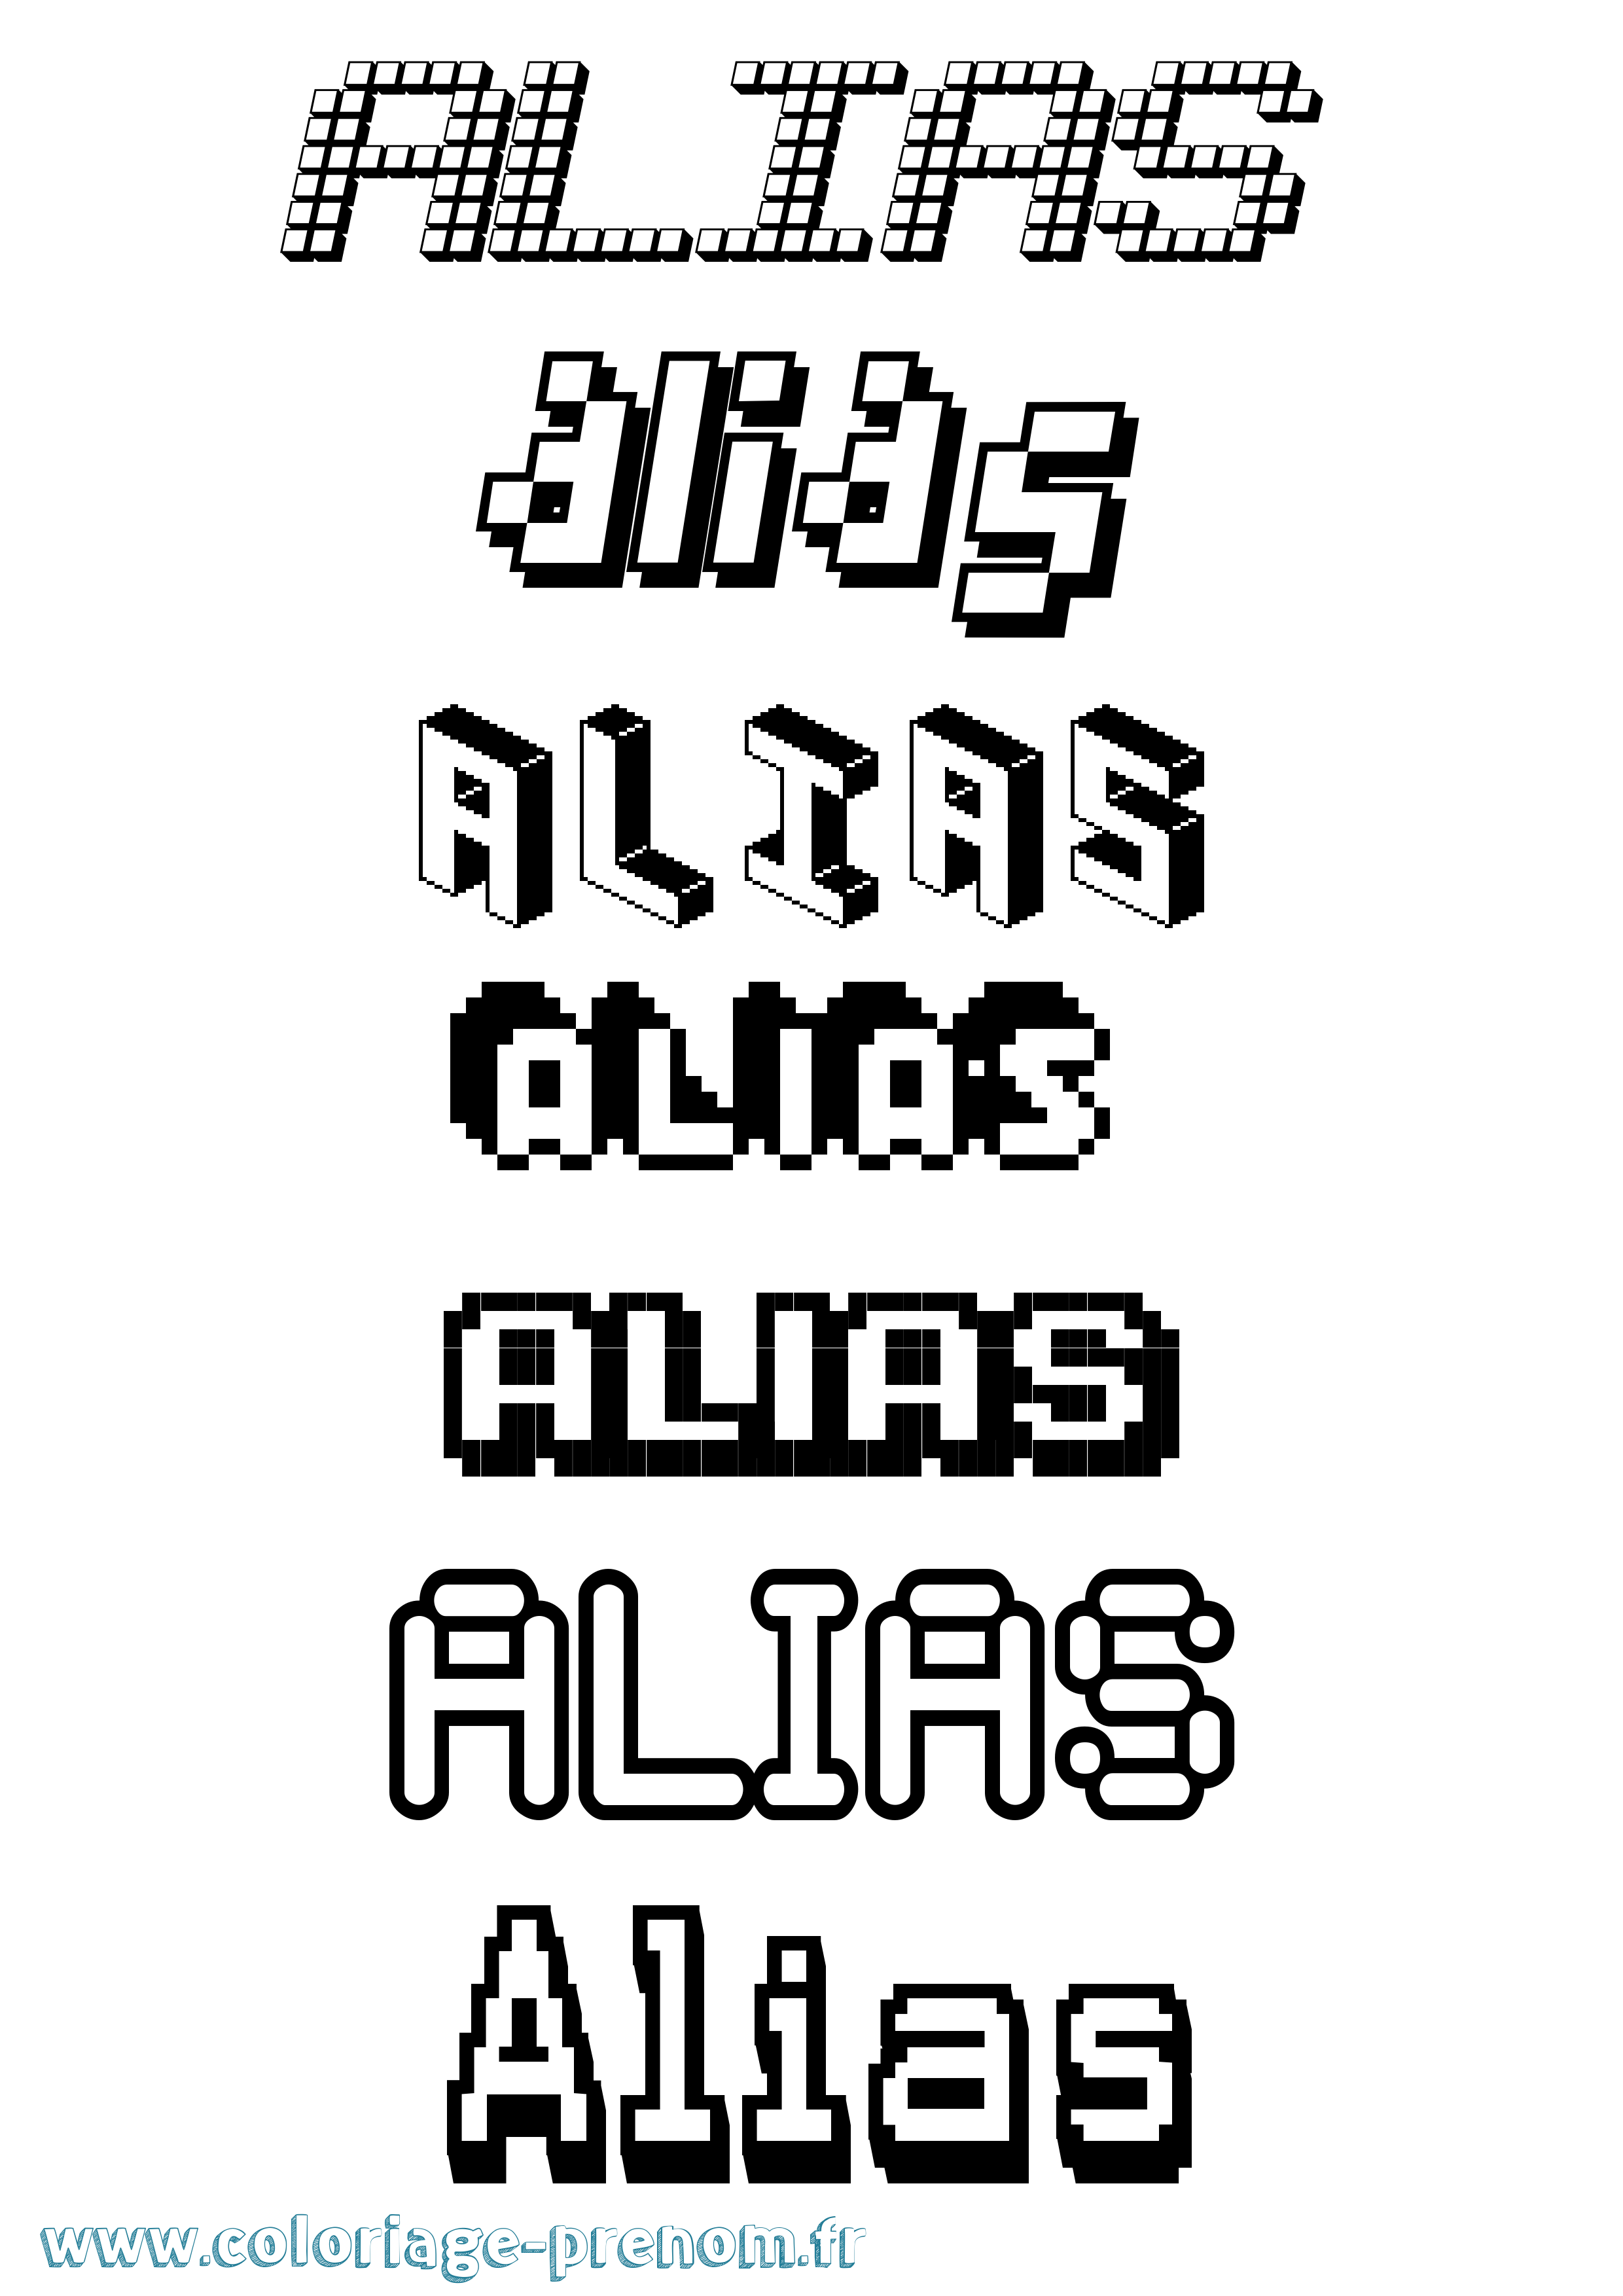 Coloriage prénom Alias Pixel